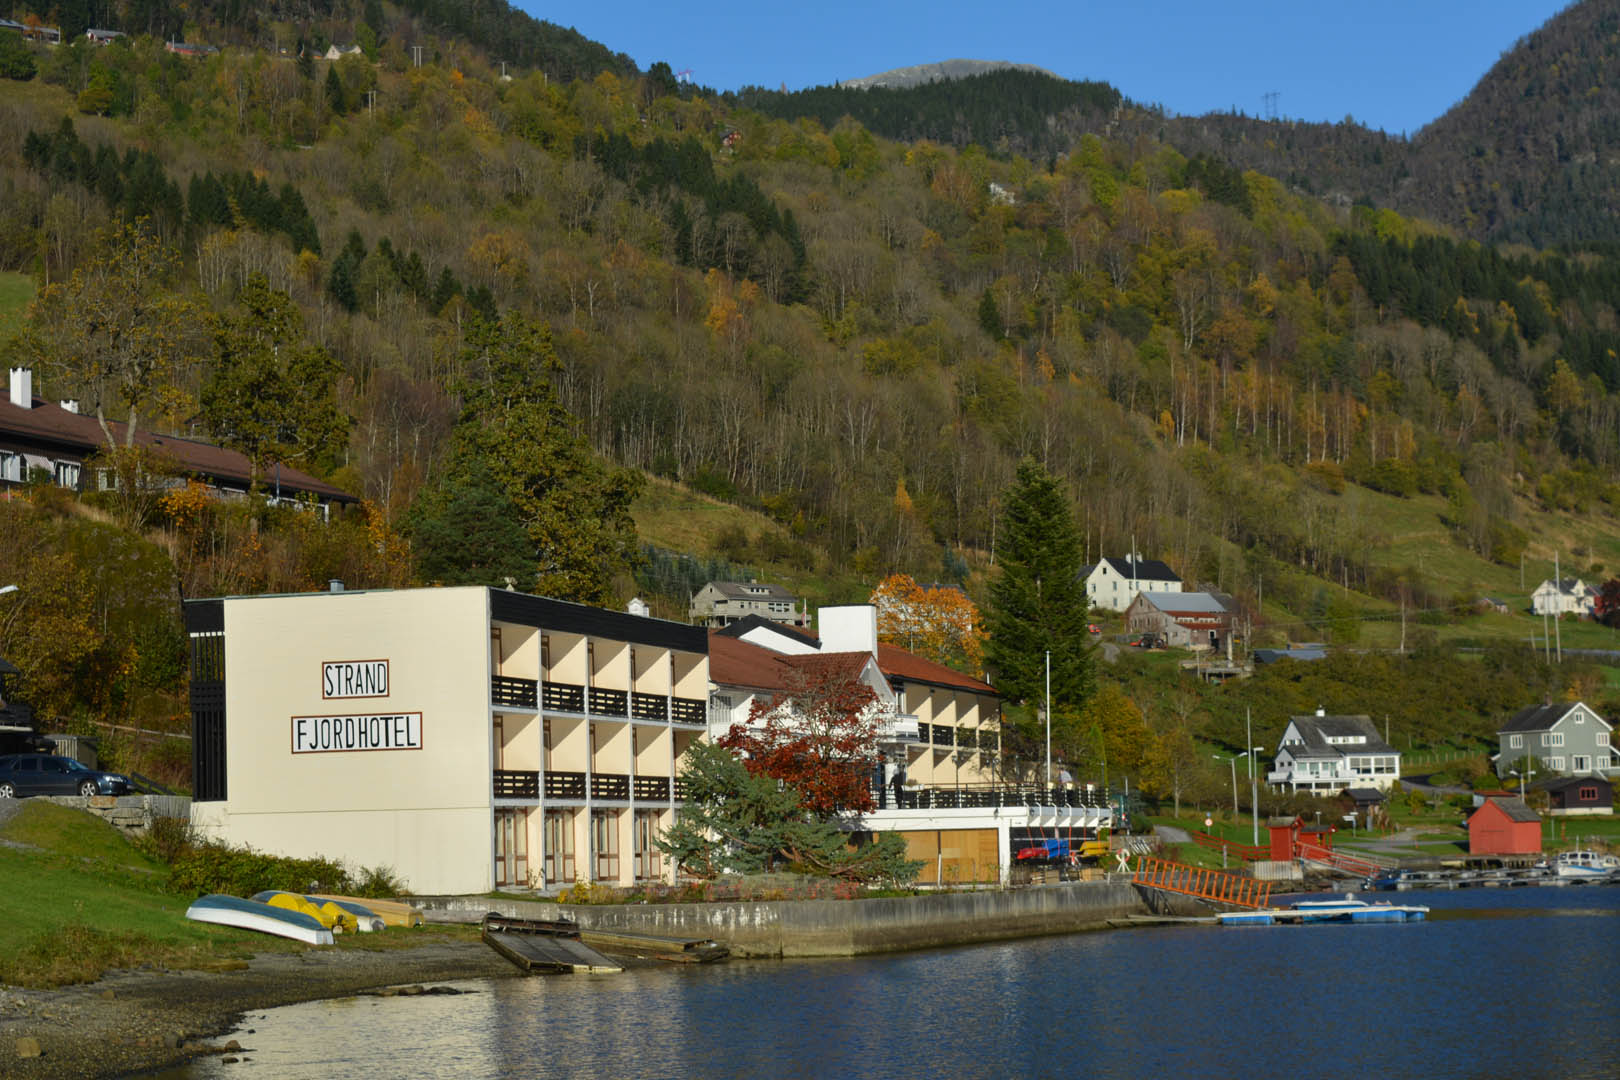 Strand Fjord hotel